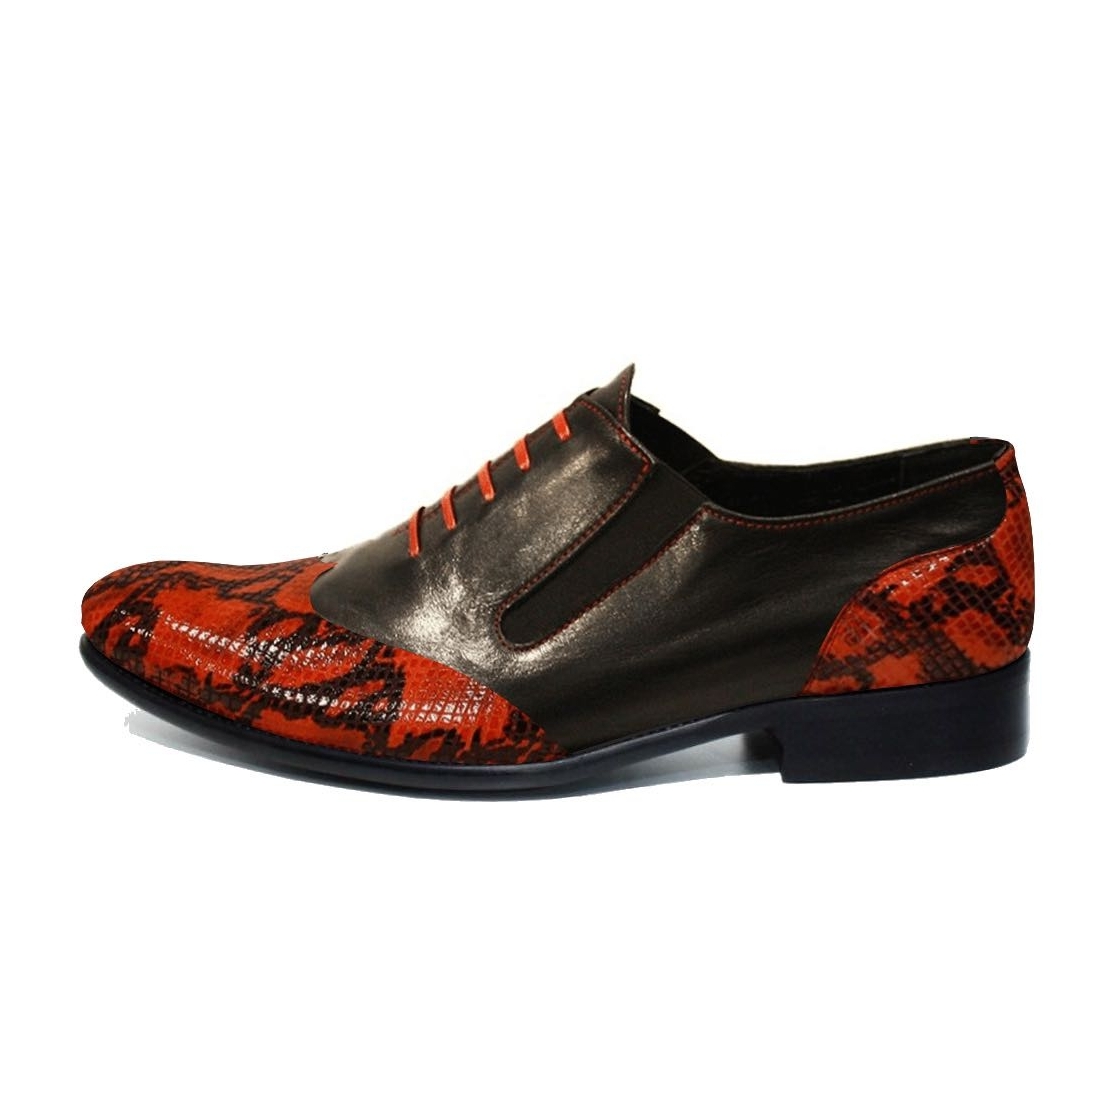 Modello Demico - Buty Wsuwane - Handmade Colorful Italian Leather Shoes